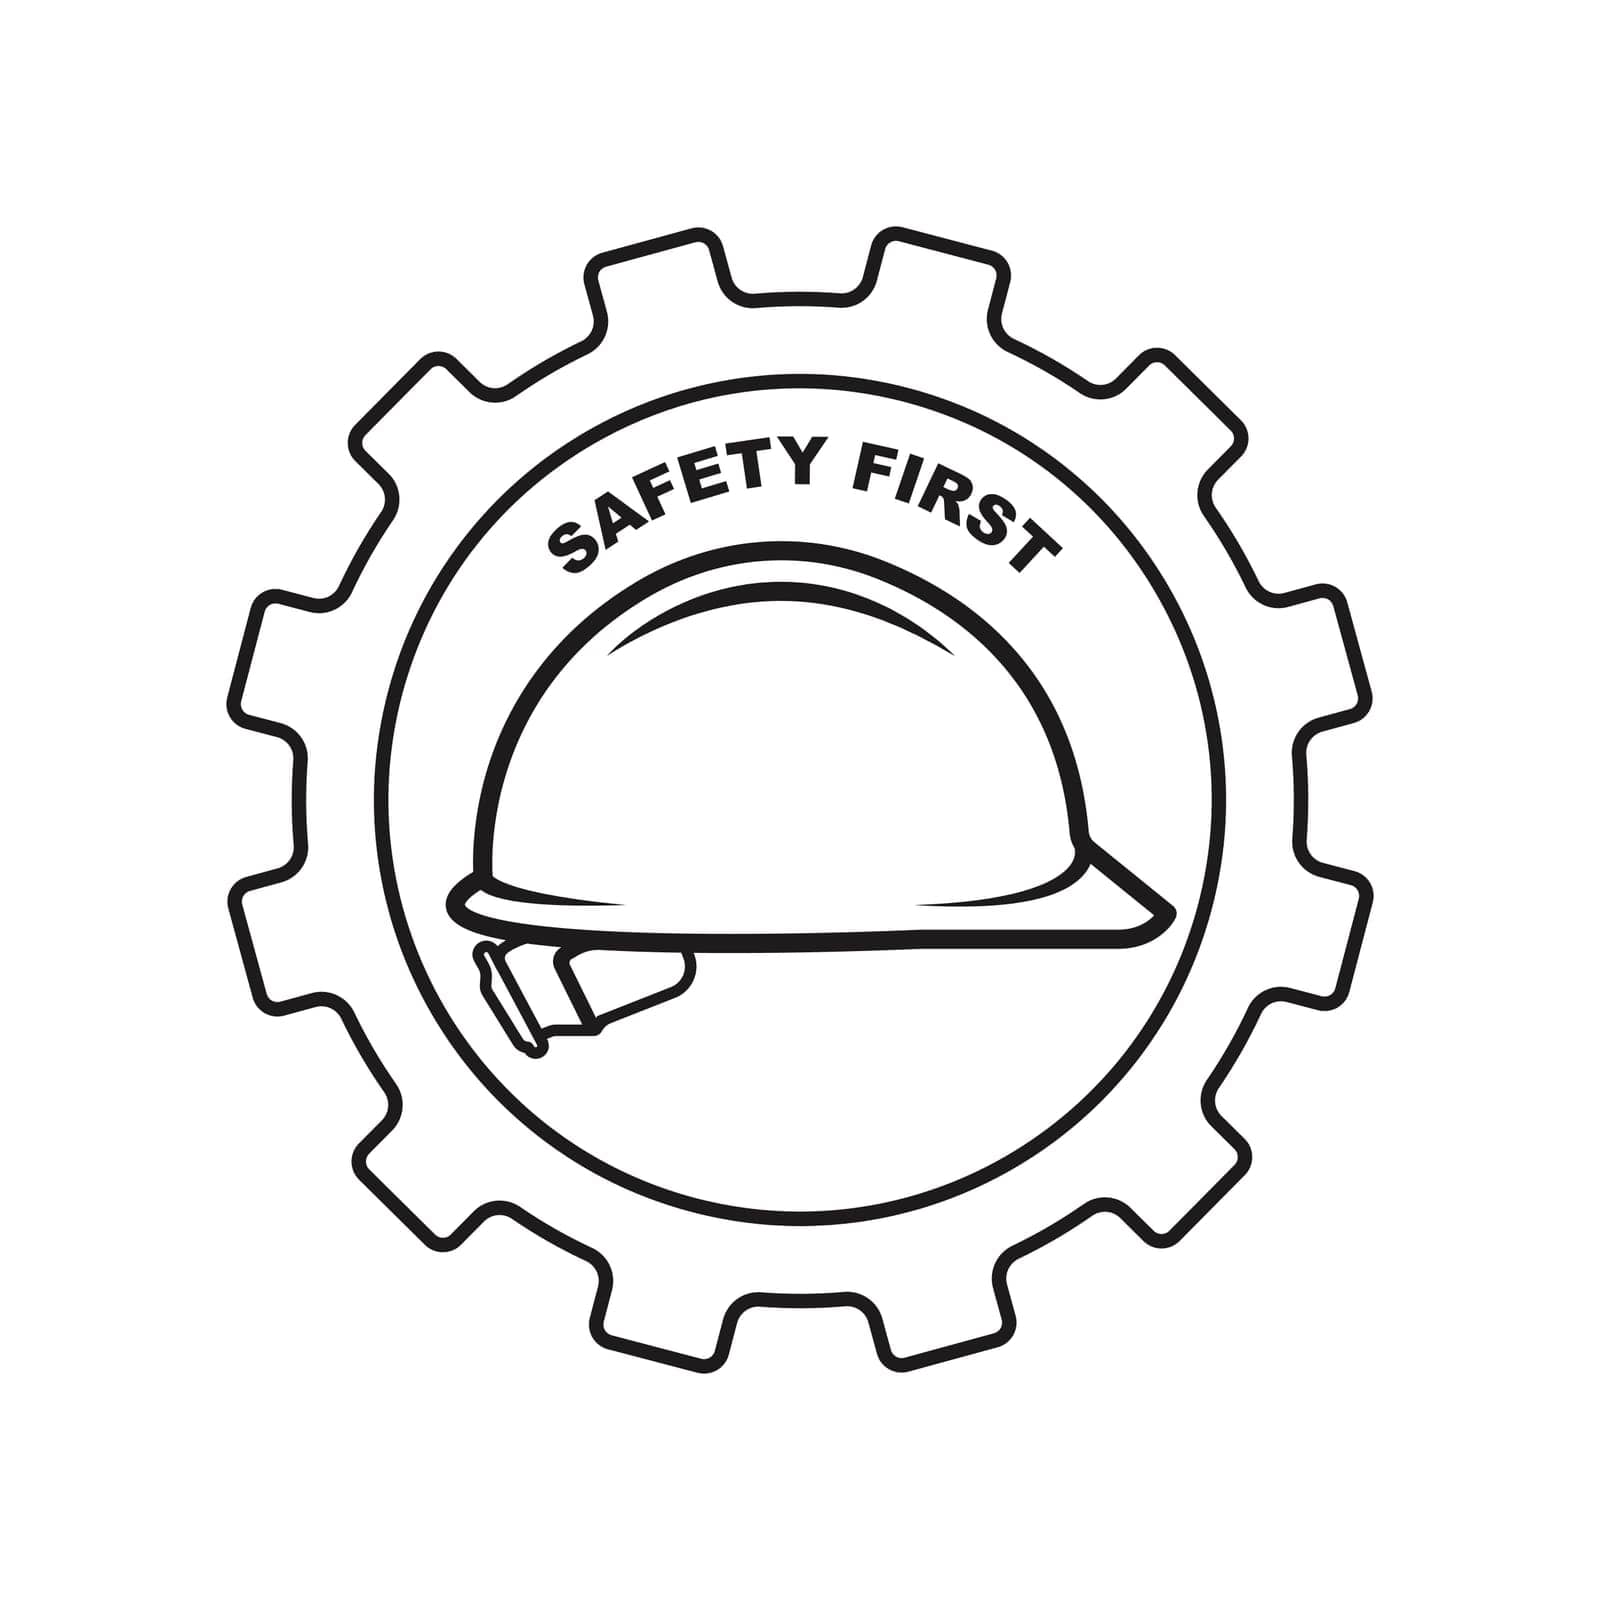 Safety first logo,vector illustration symbol design